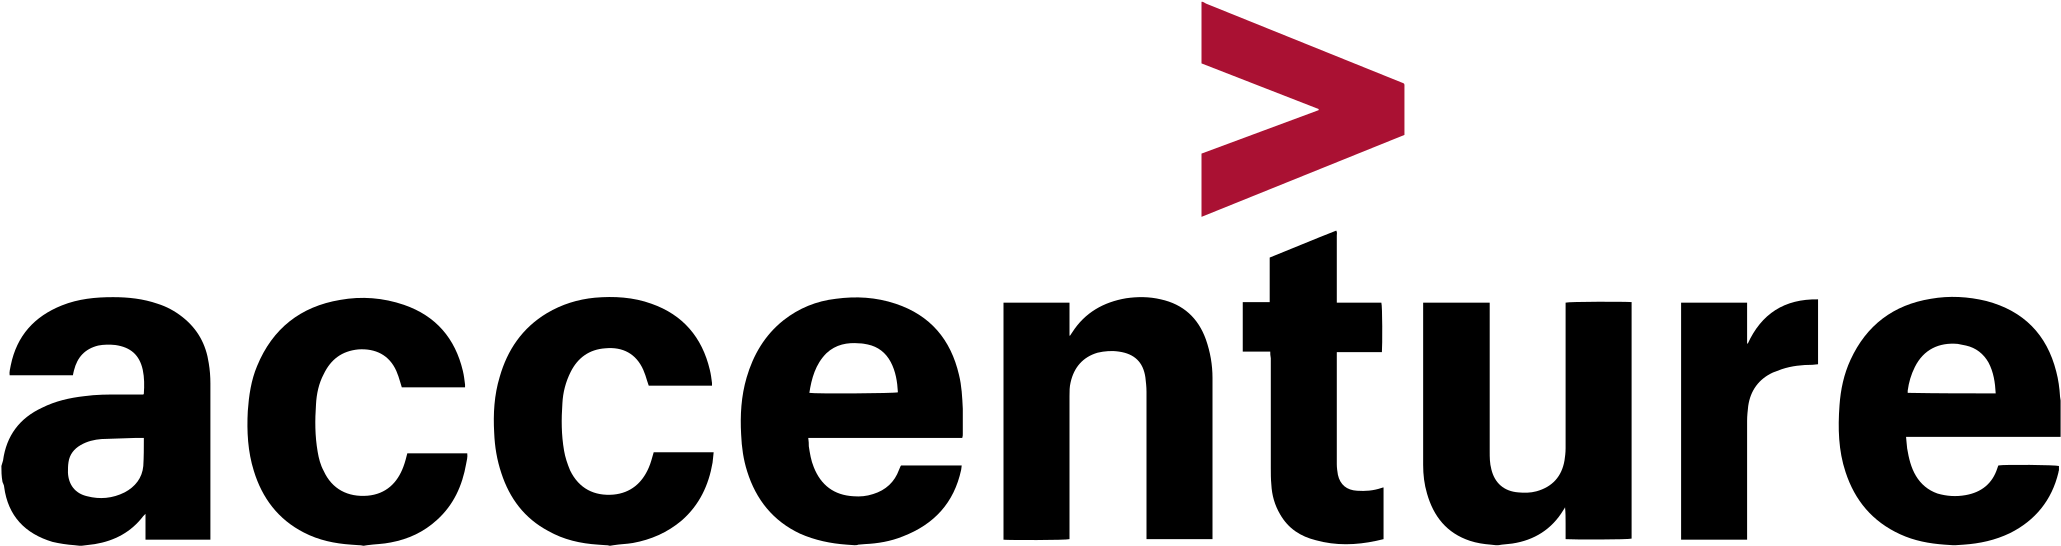 Accenture Logo Branding